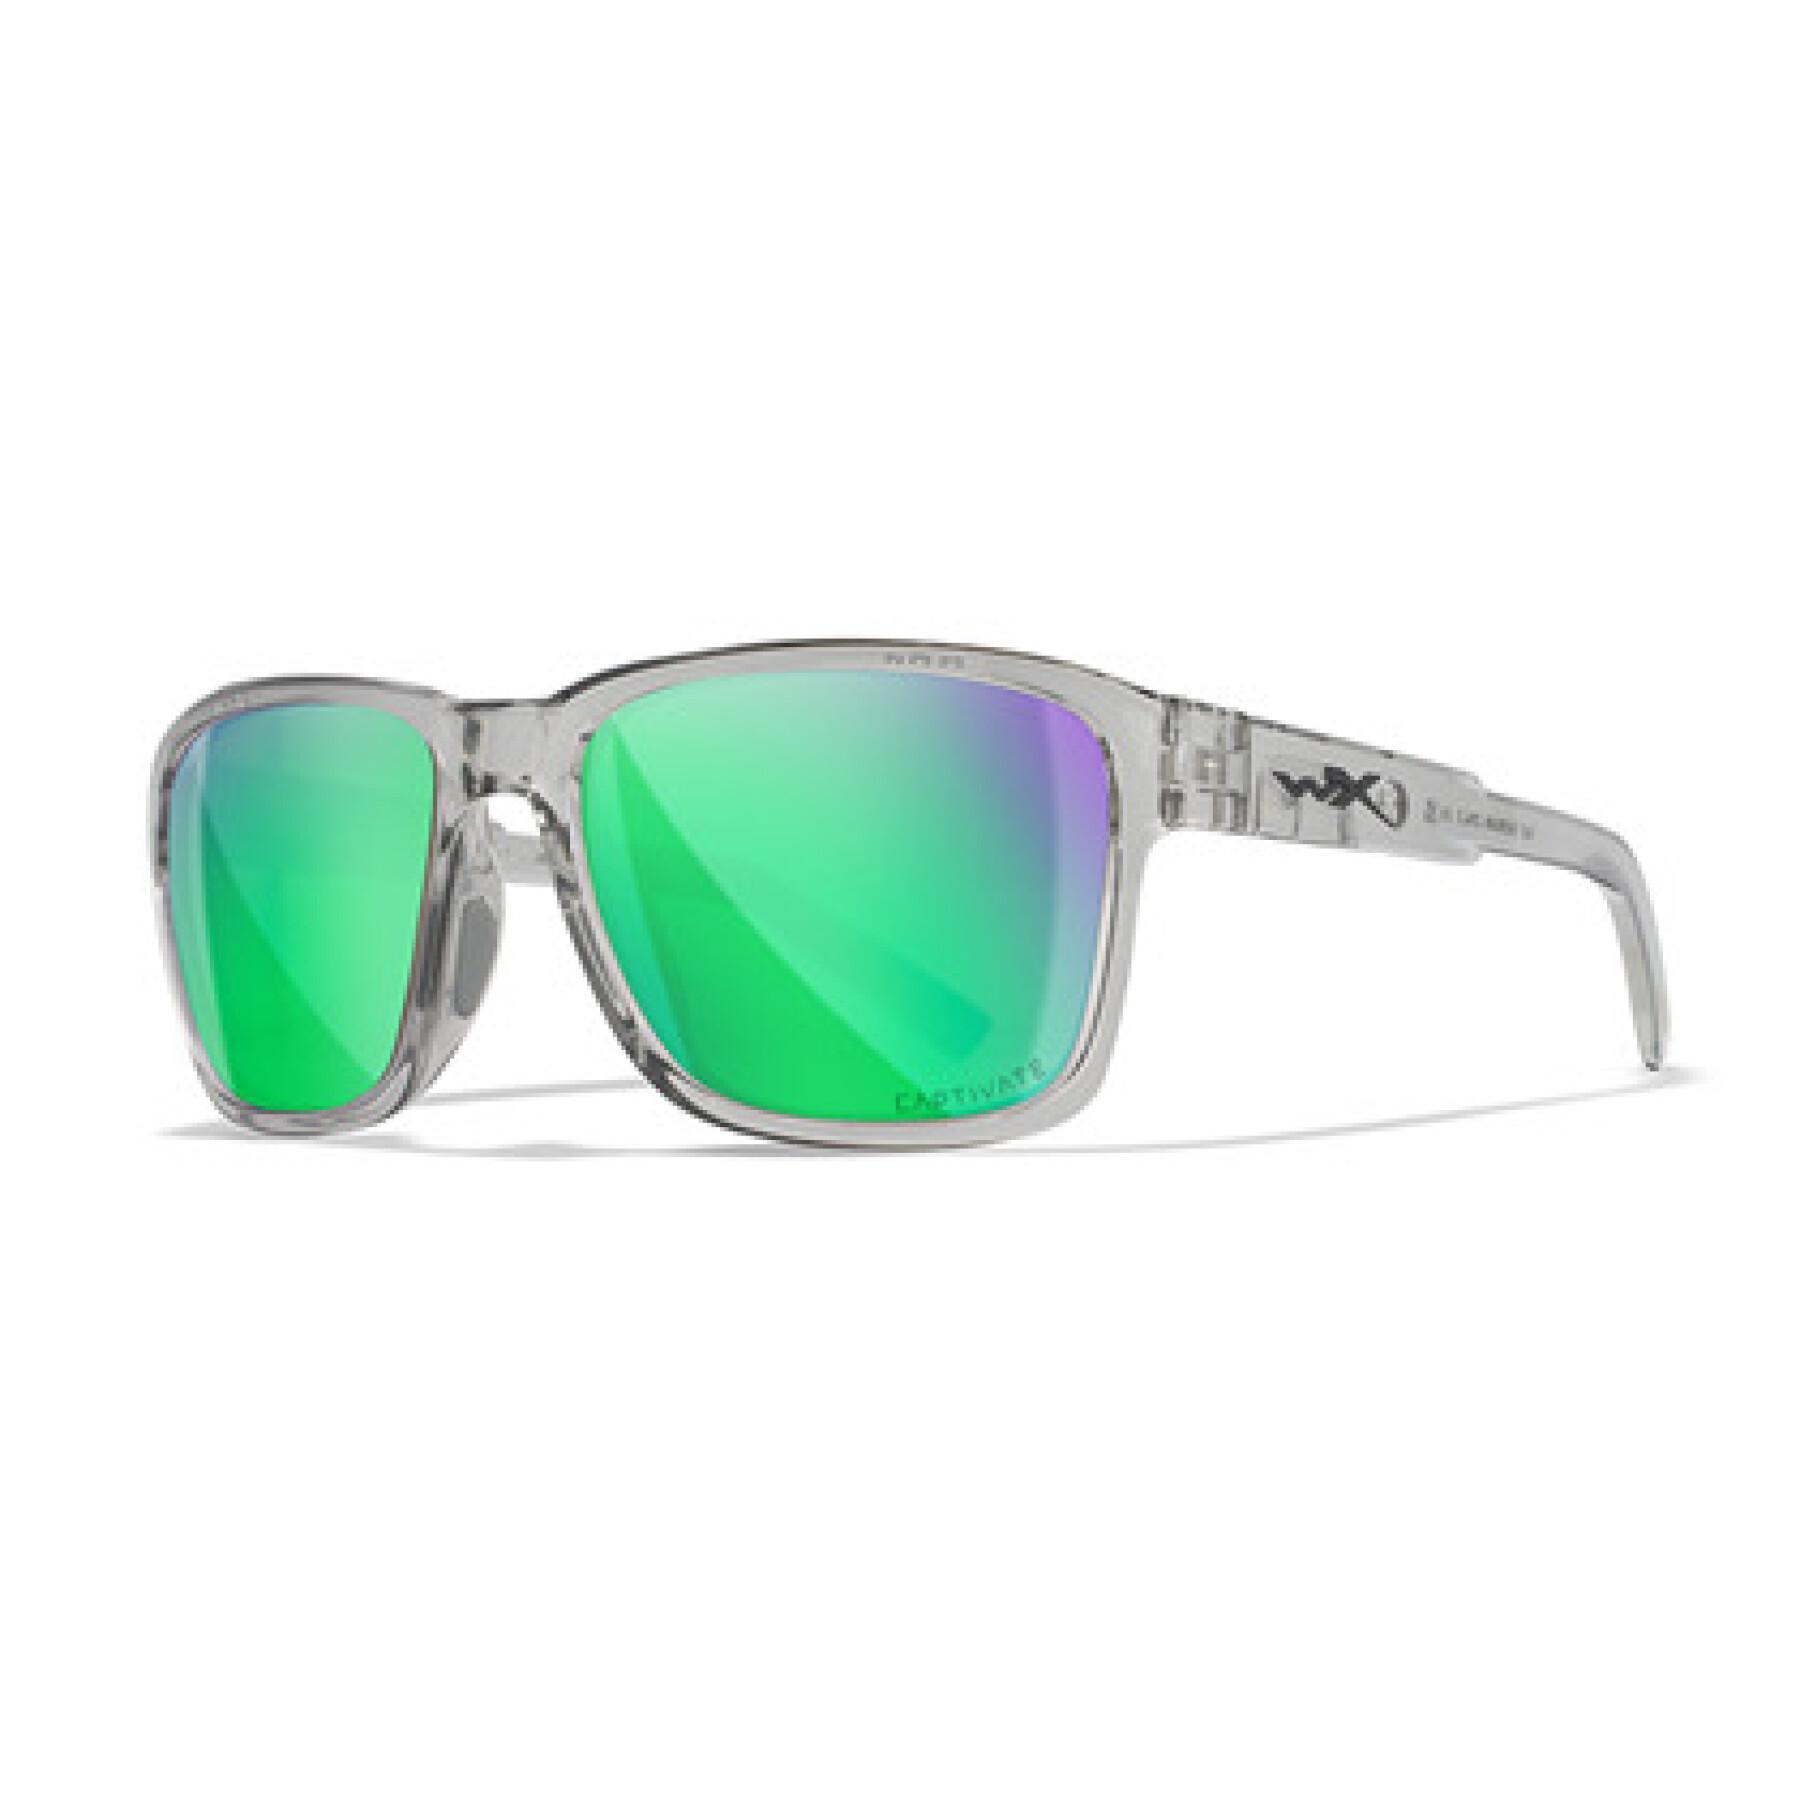 Polarized sunglasses Wiley X Trek Captivate monture gris clair cristal brillant (Ac6trk07)